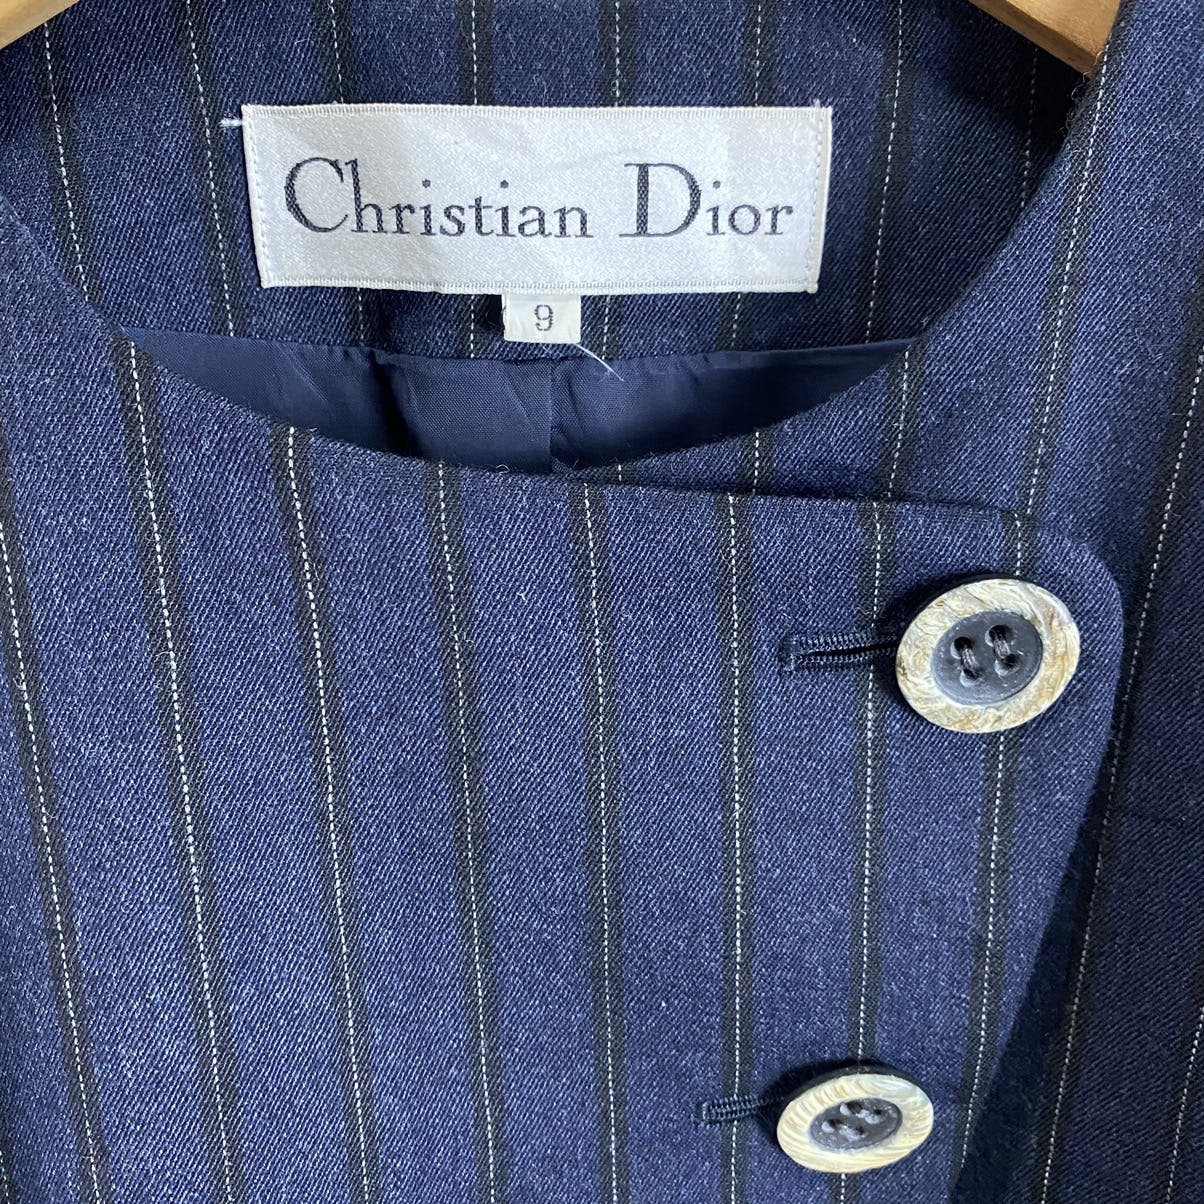 Christian Dior Monsieur - Christian Dior Single-Breasted Coat slant button Jacket - 9